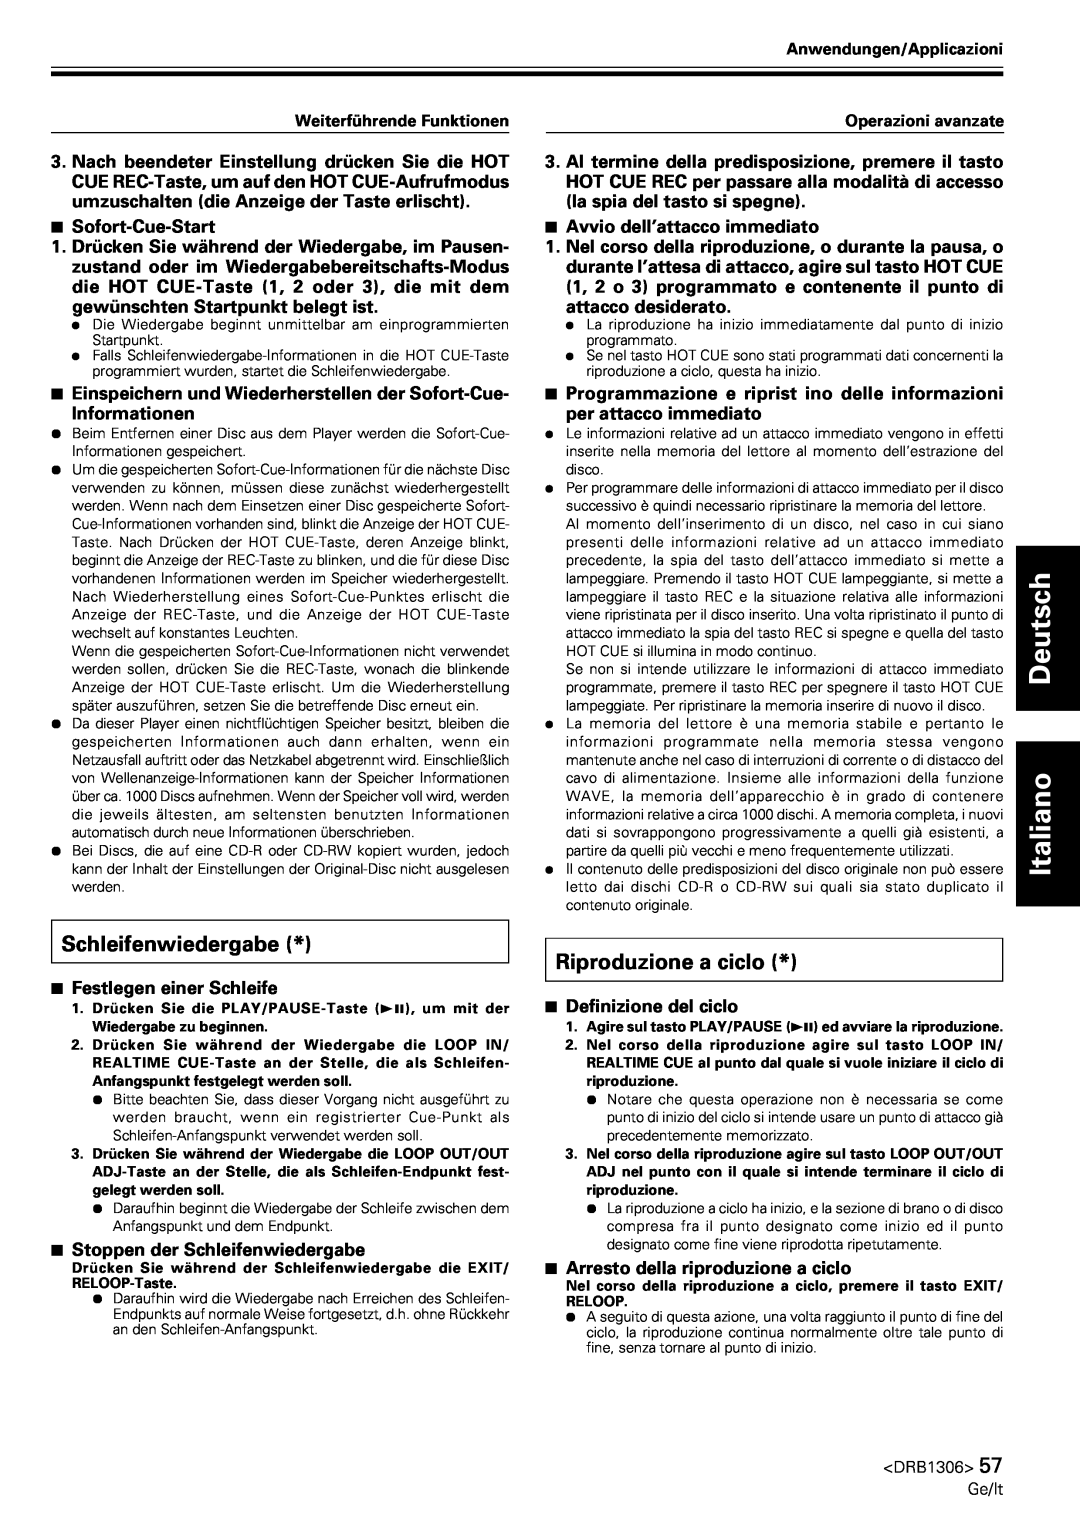 Pioneer CMX-3000 operating instructions Schleifenwiedergabe, Riproduzione a ciclo, Deutsch Italiano 